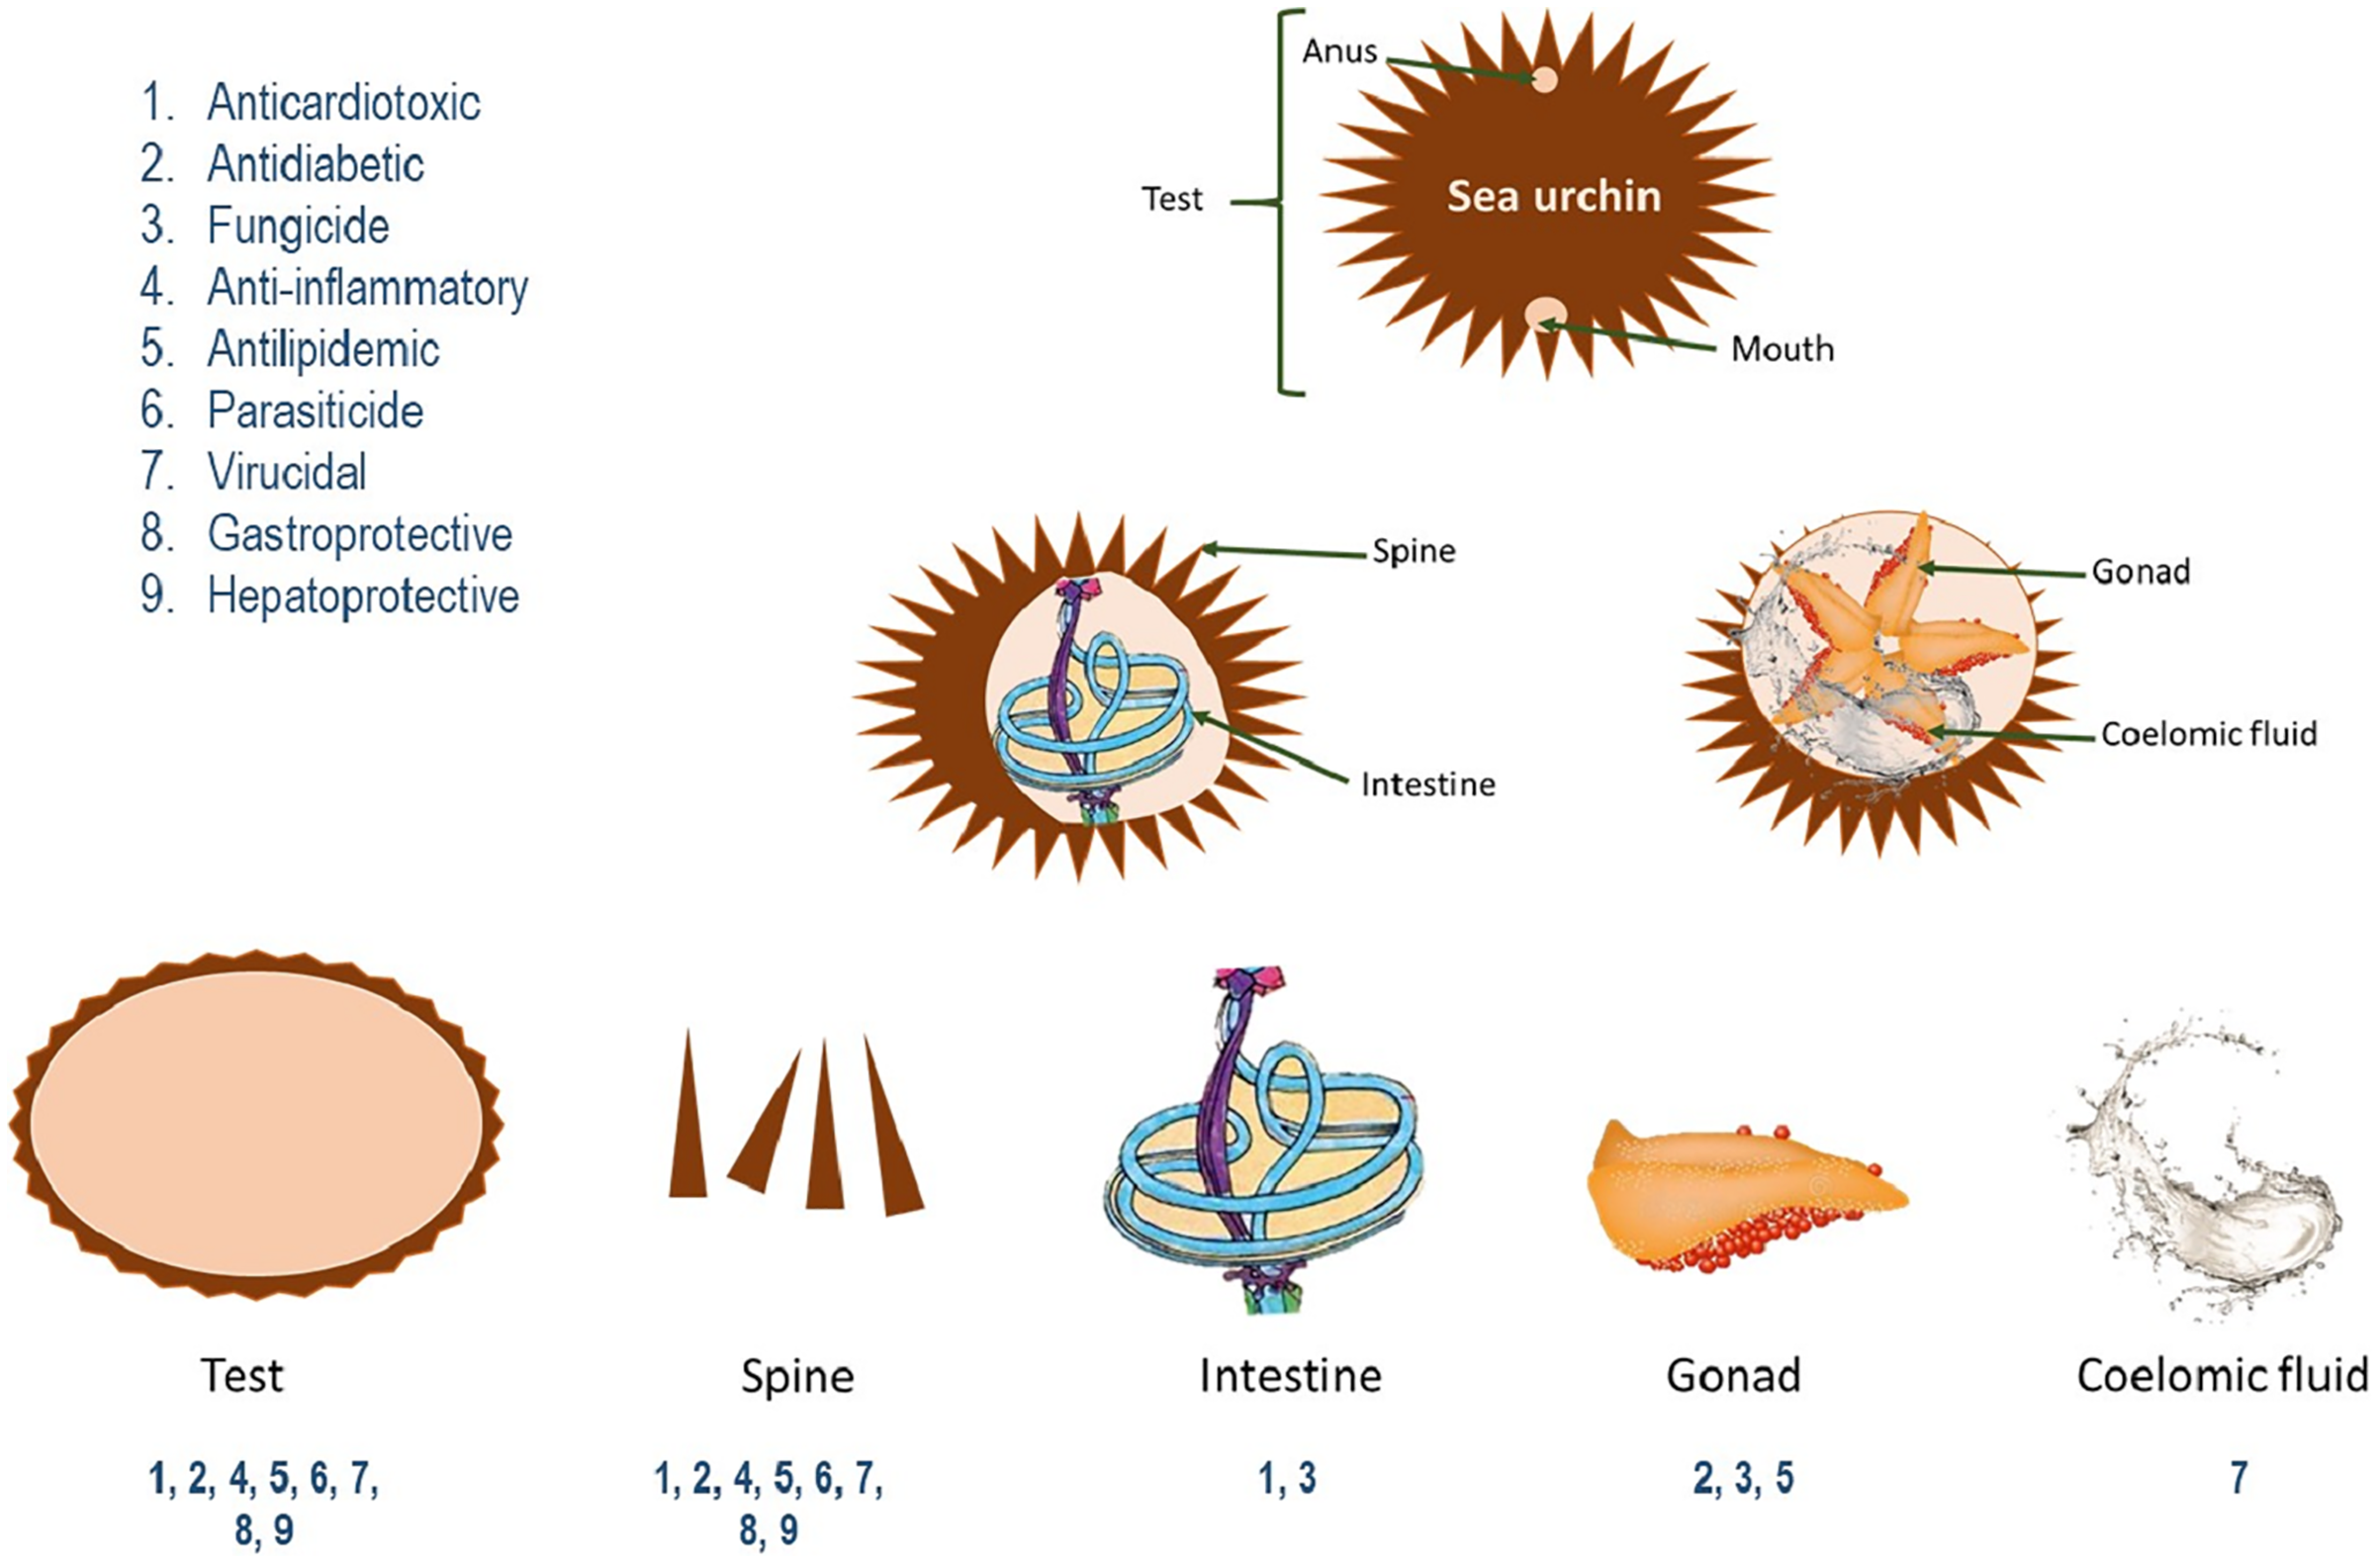 Sea urchins: an update on their pharmacological properties [PeerJ]